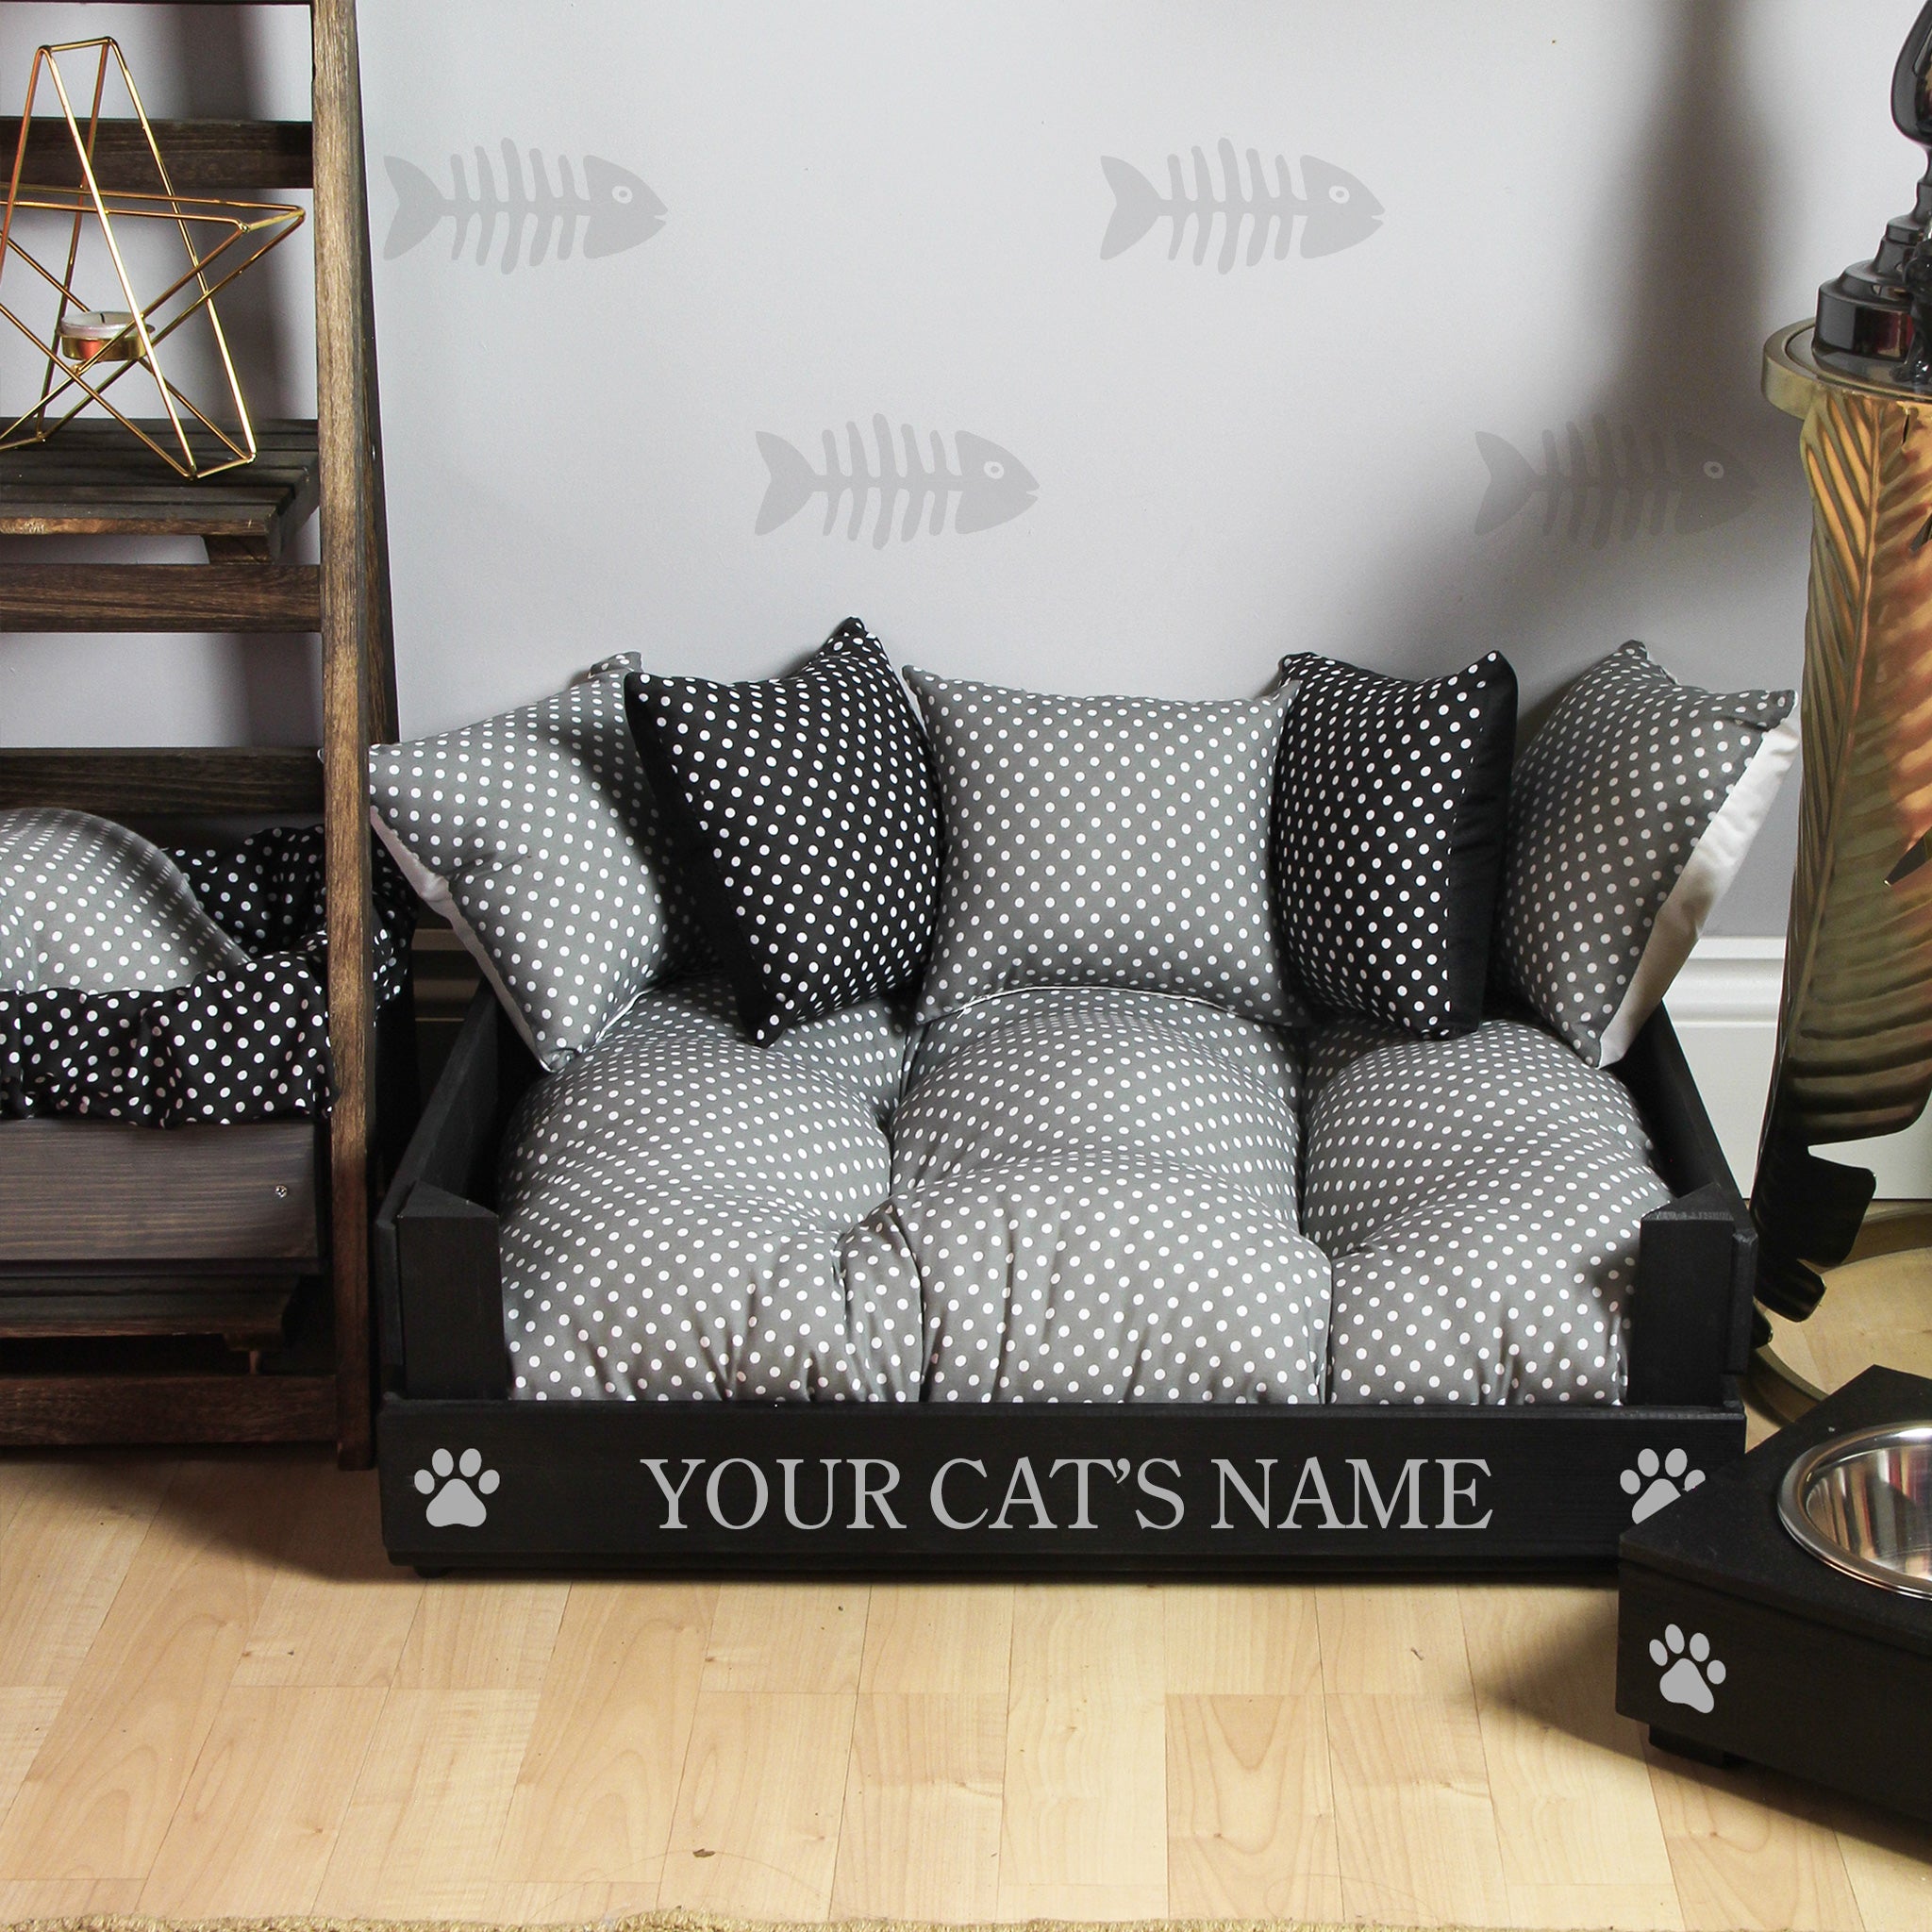 Wooden Personalised Cat Bed (46 x 59cm) - Ebony Black & Grey Polka Dot